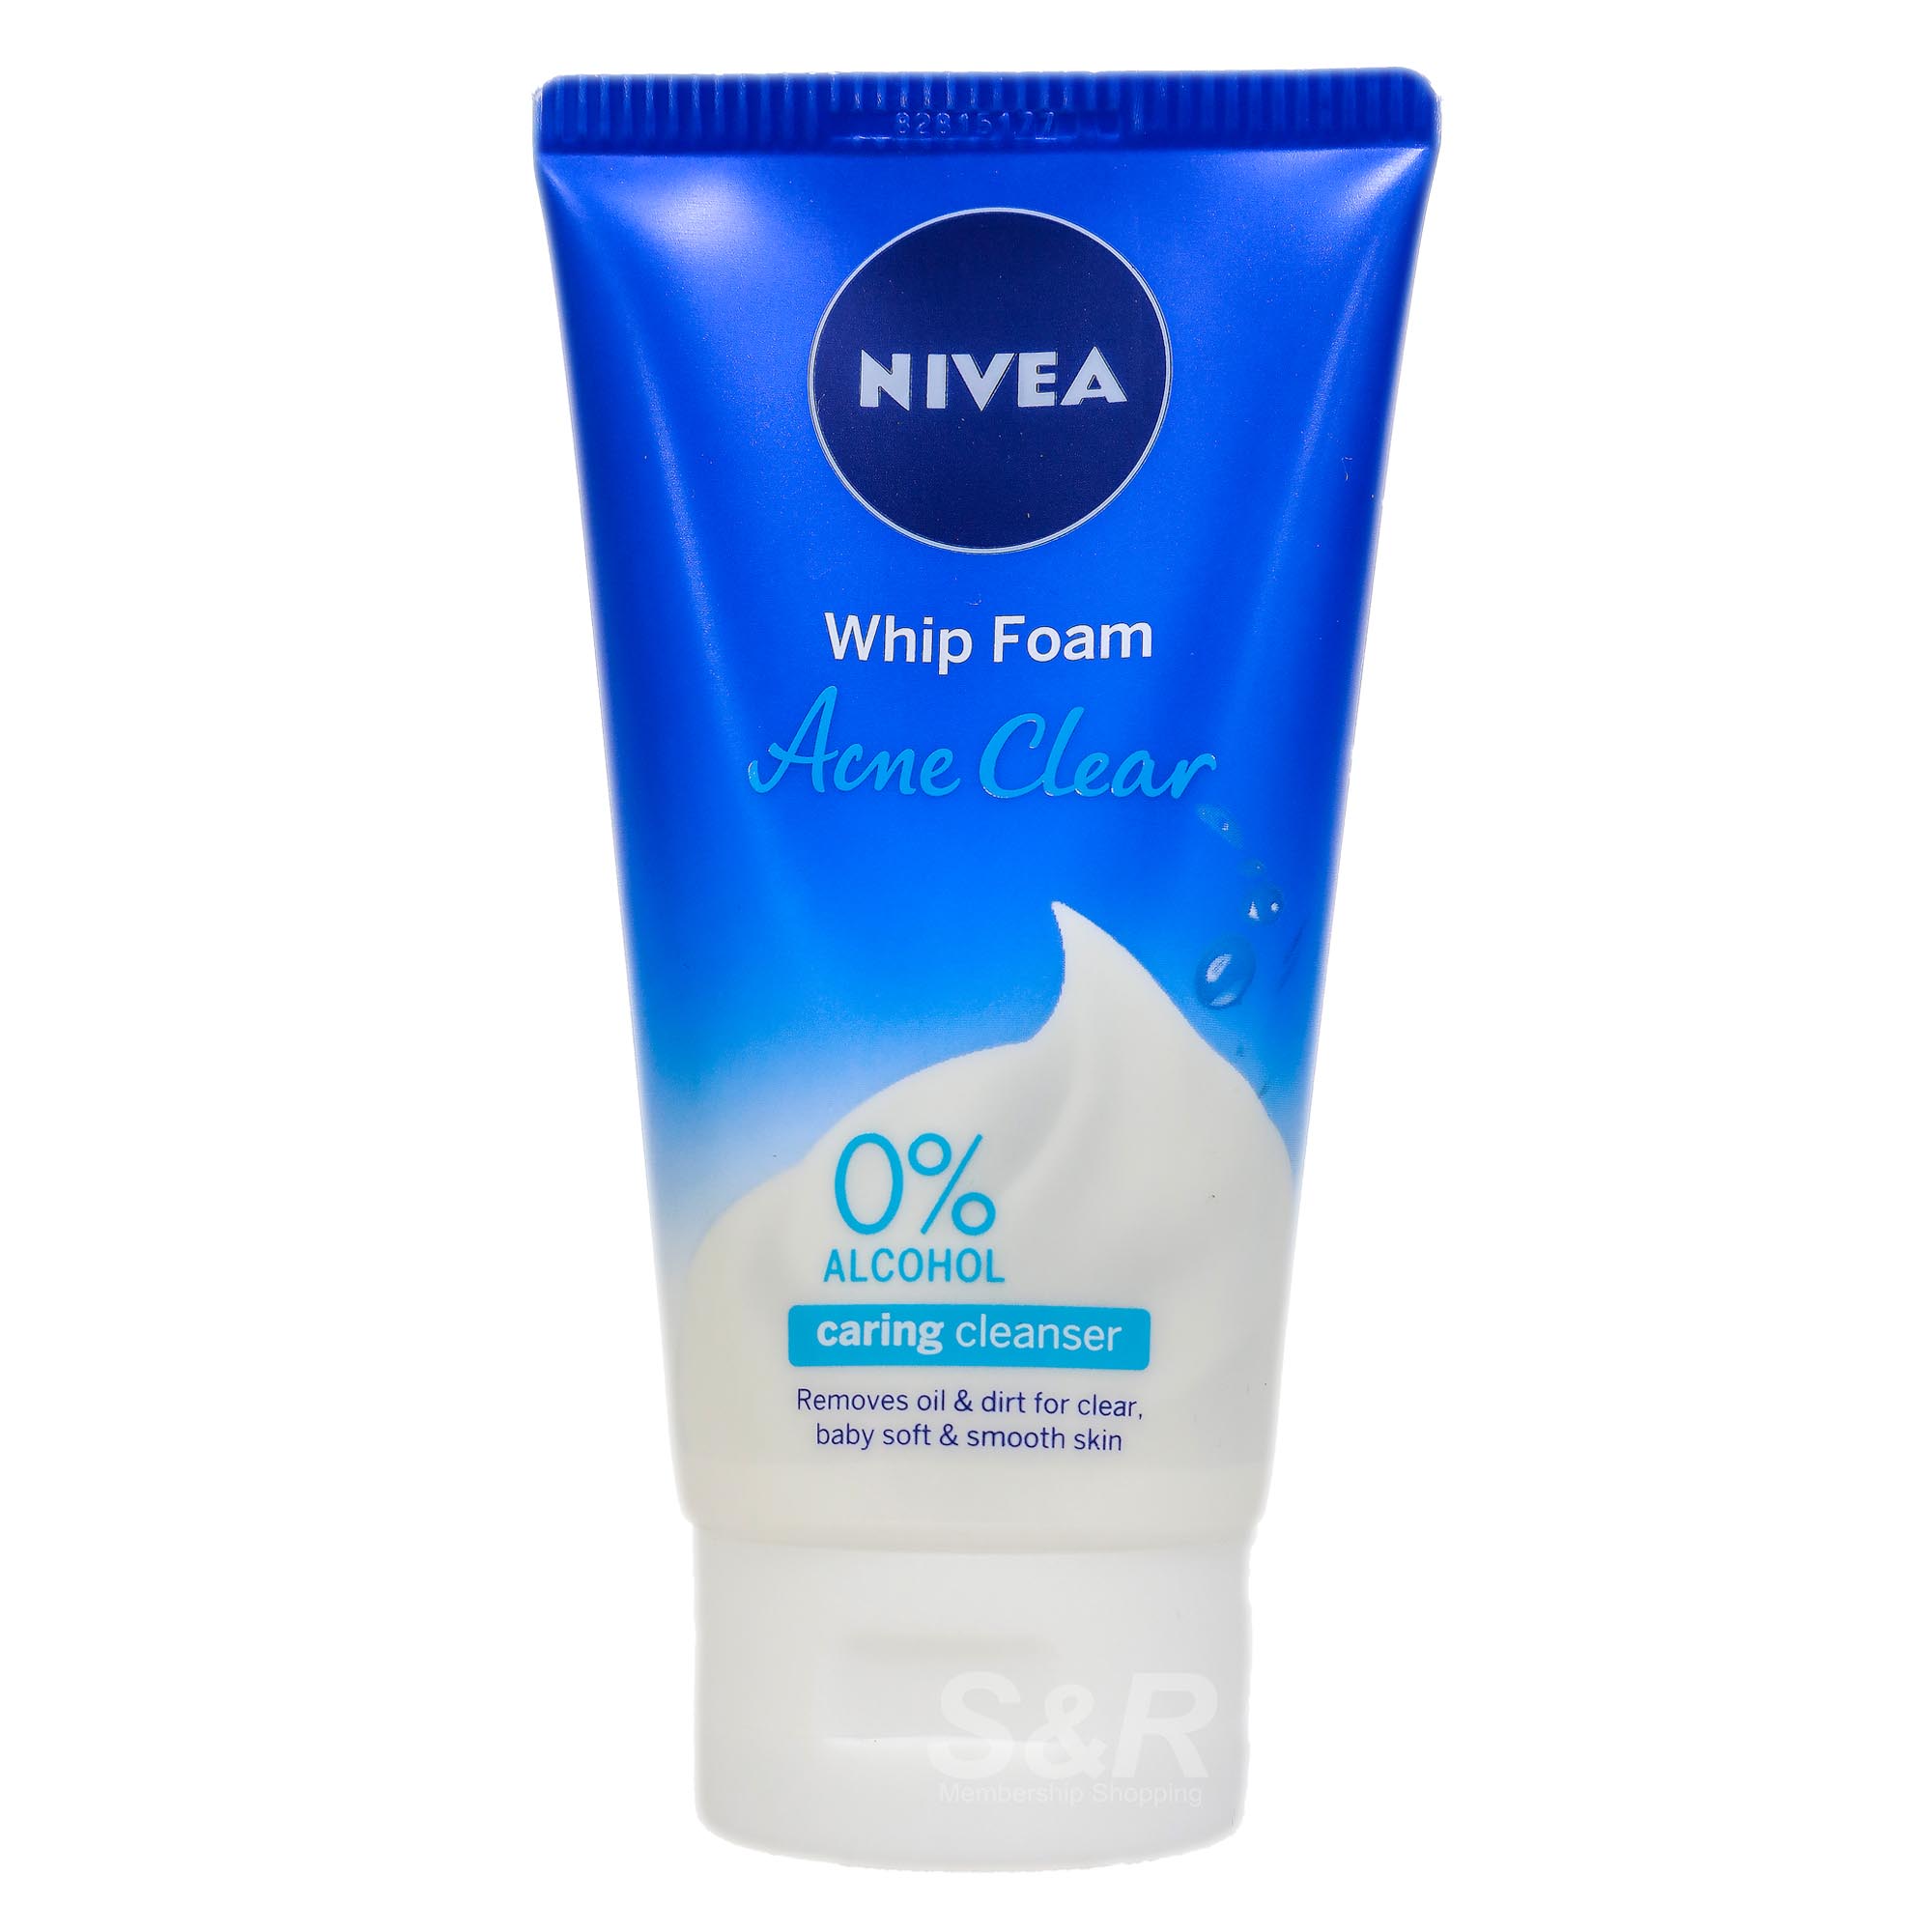 Nivea Whip Foam Acne Clear Caring Cleanser 100mL